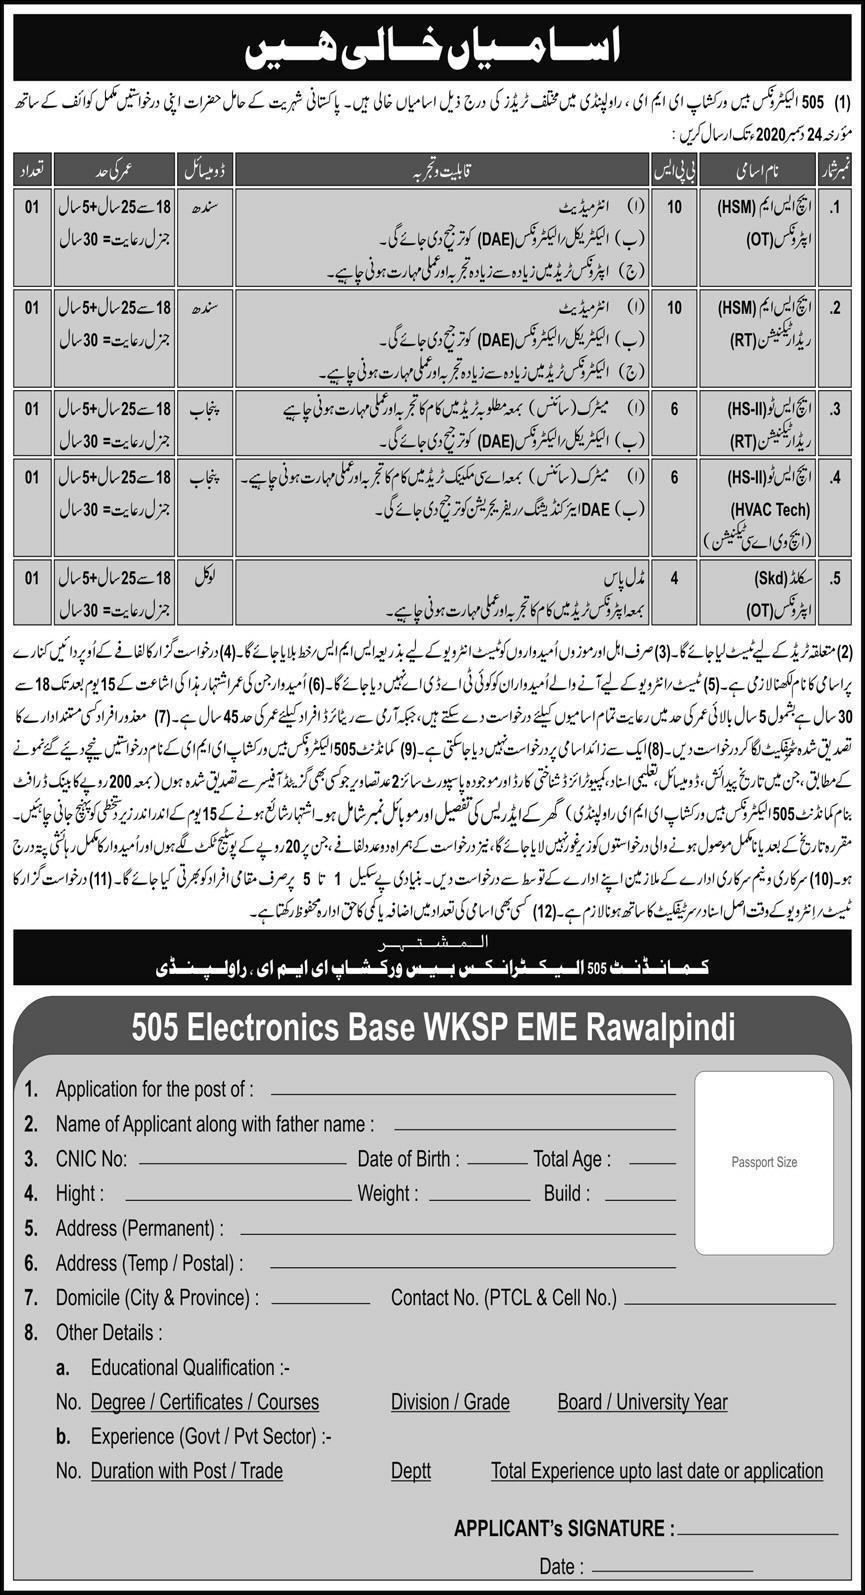 Pak Army 505 Electronic Base Workshop EME Rawalpindi Jobs 2020